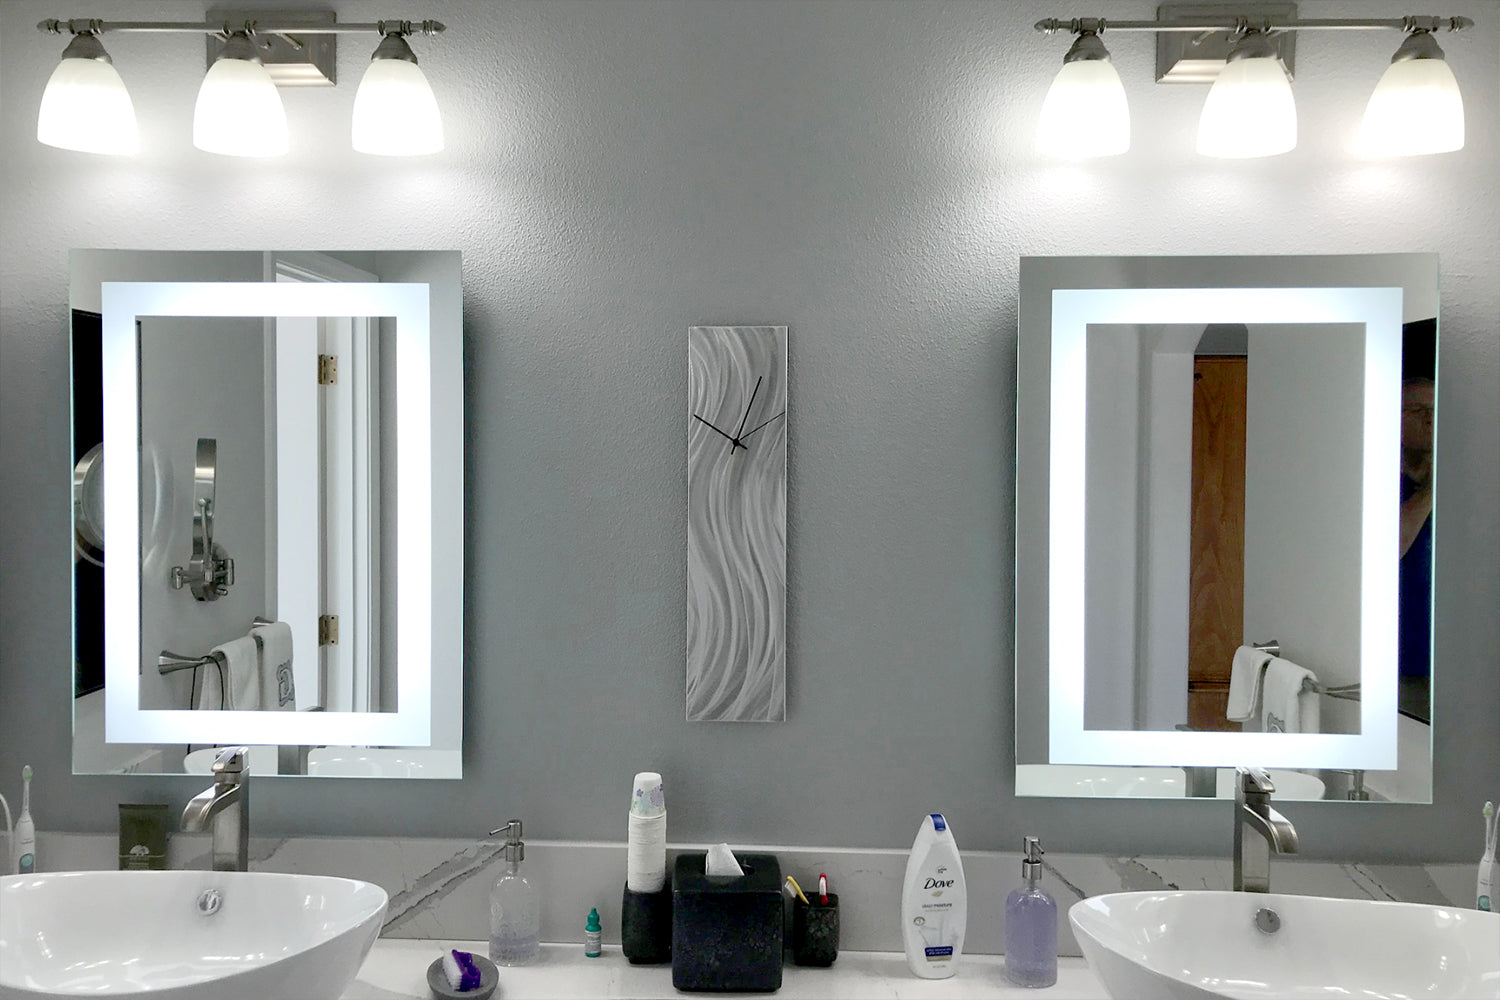 24 Inch Bathroom Vanity With Mirror